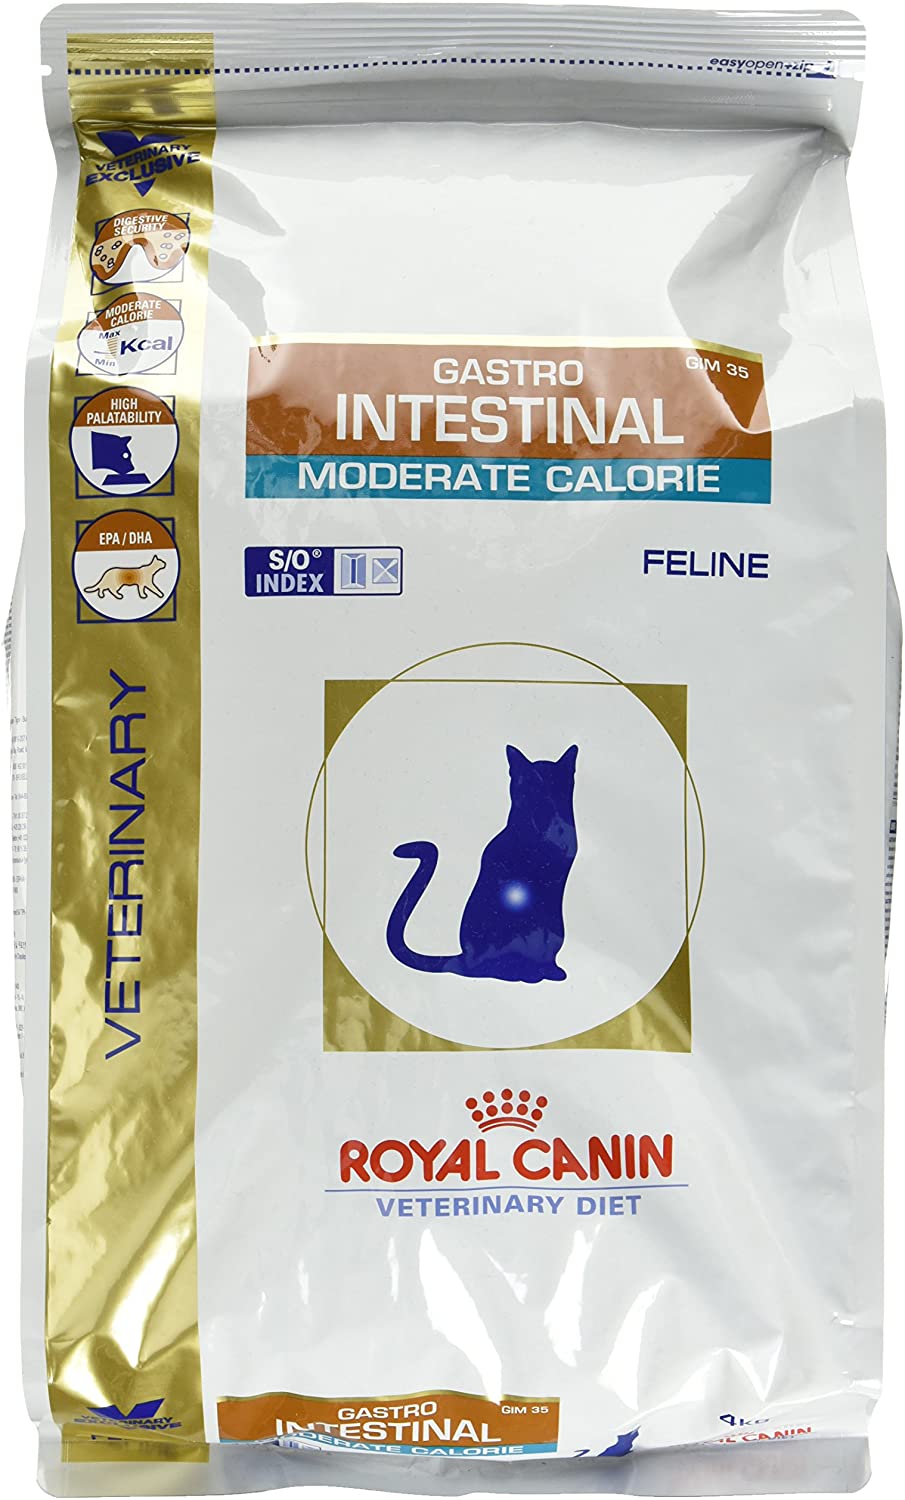  ROYAL CANIN Alimento para Gatos Moderate Calorie GIM35-4 kg 